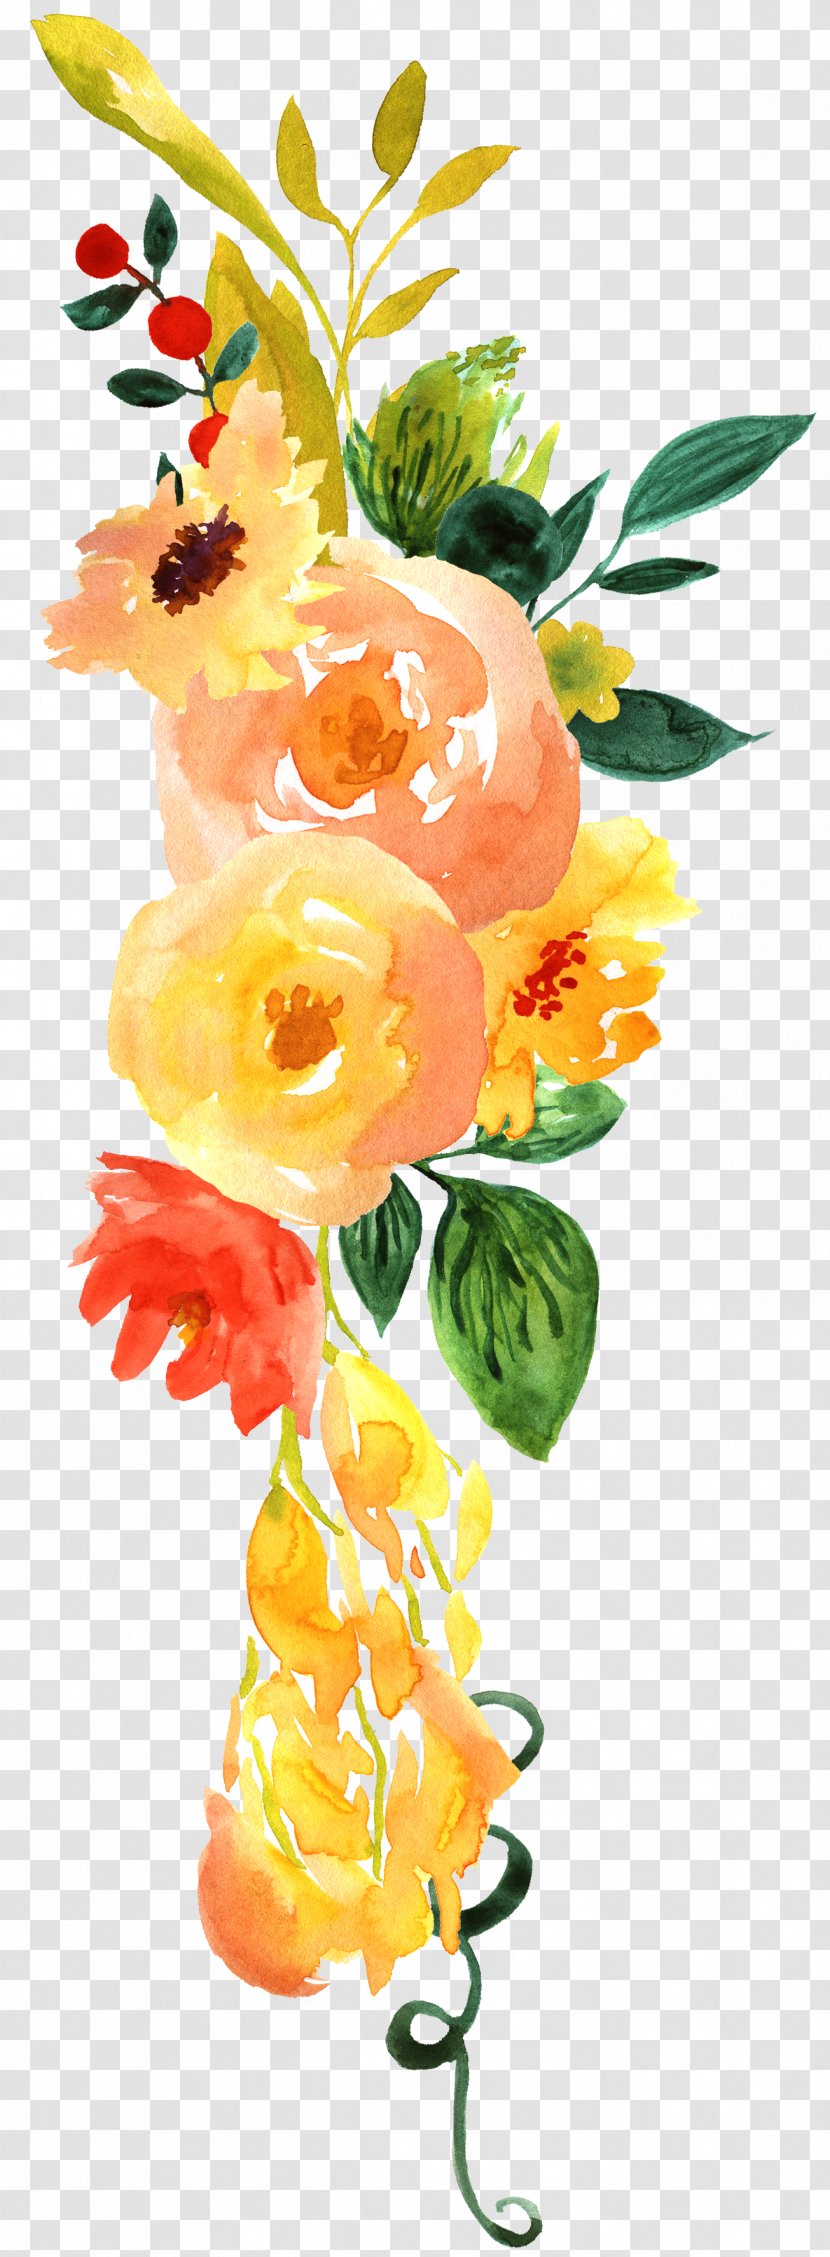 Watercolor Painting Clip Art Image - Motif - Carnations Cartoon Transparent PNG